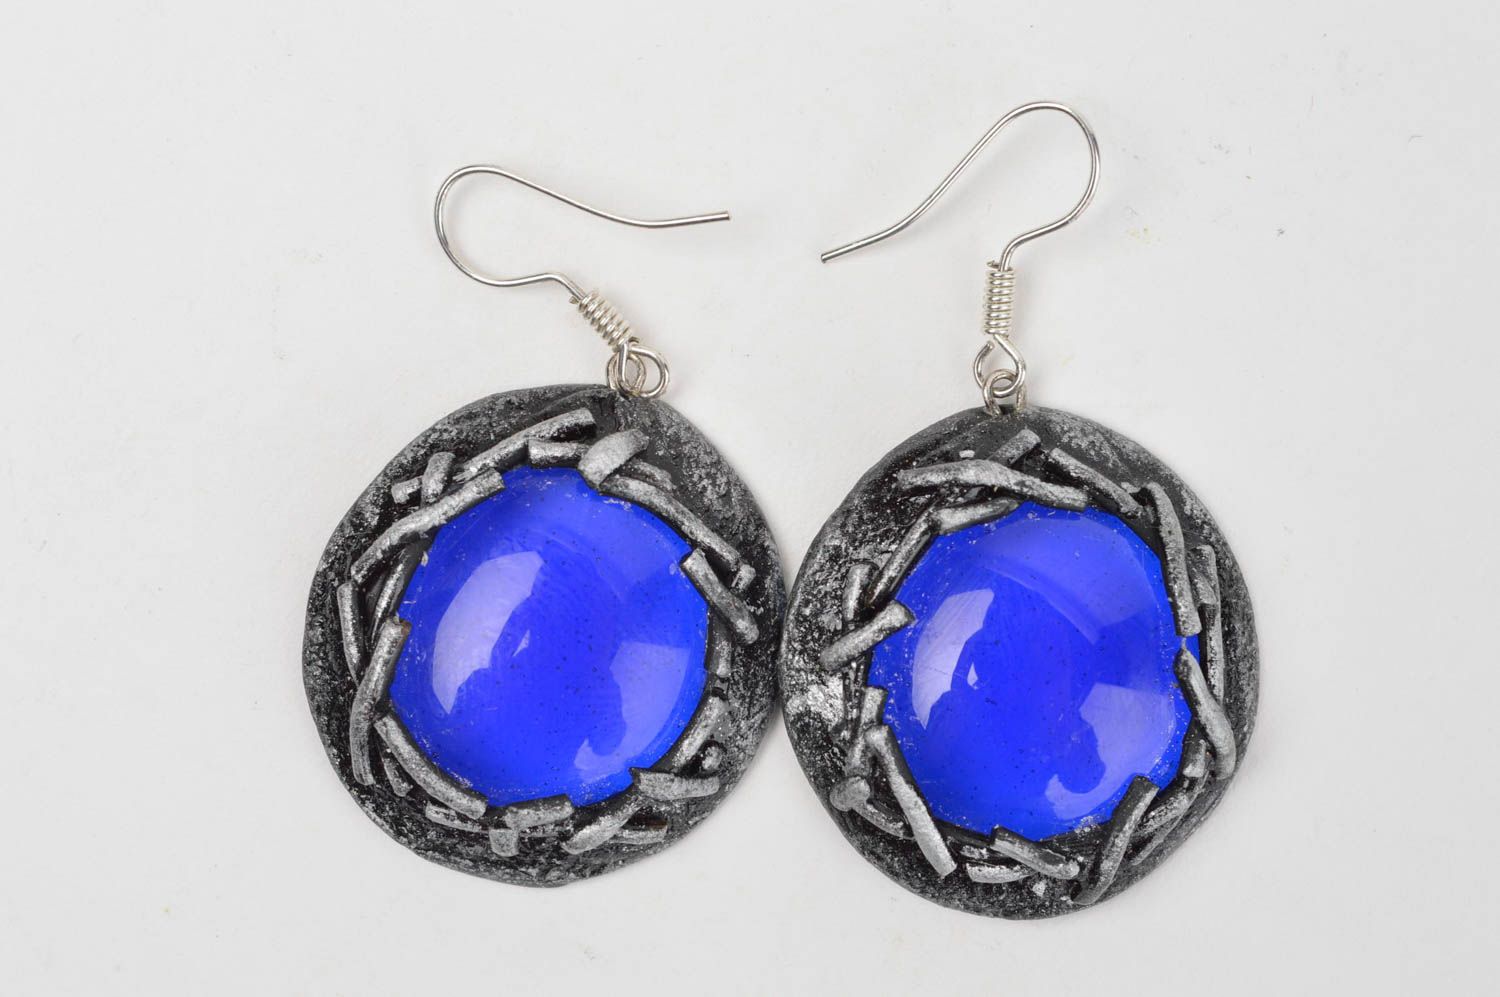 Fashionable blue earrings stylish jewelry handmade unusual accessories photo 2